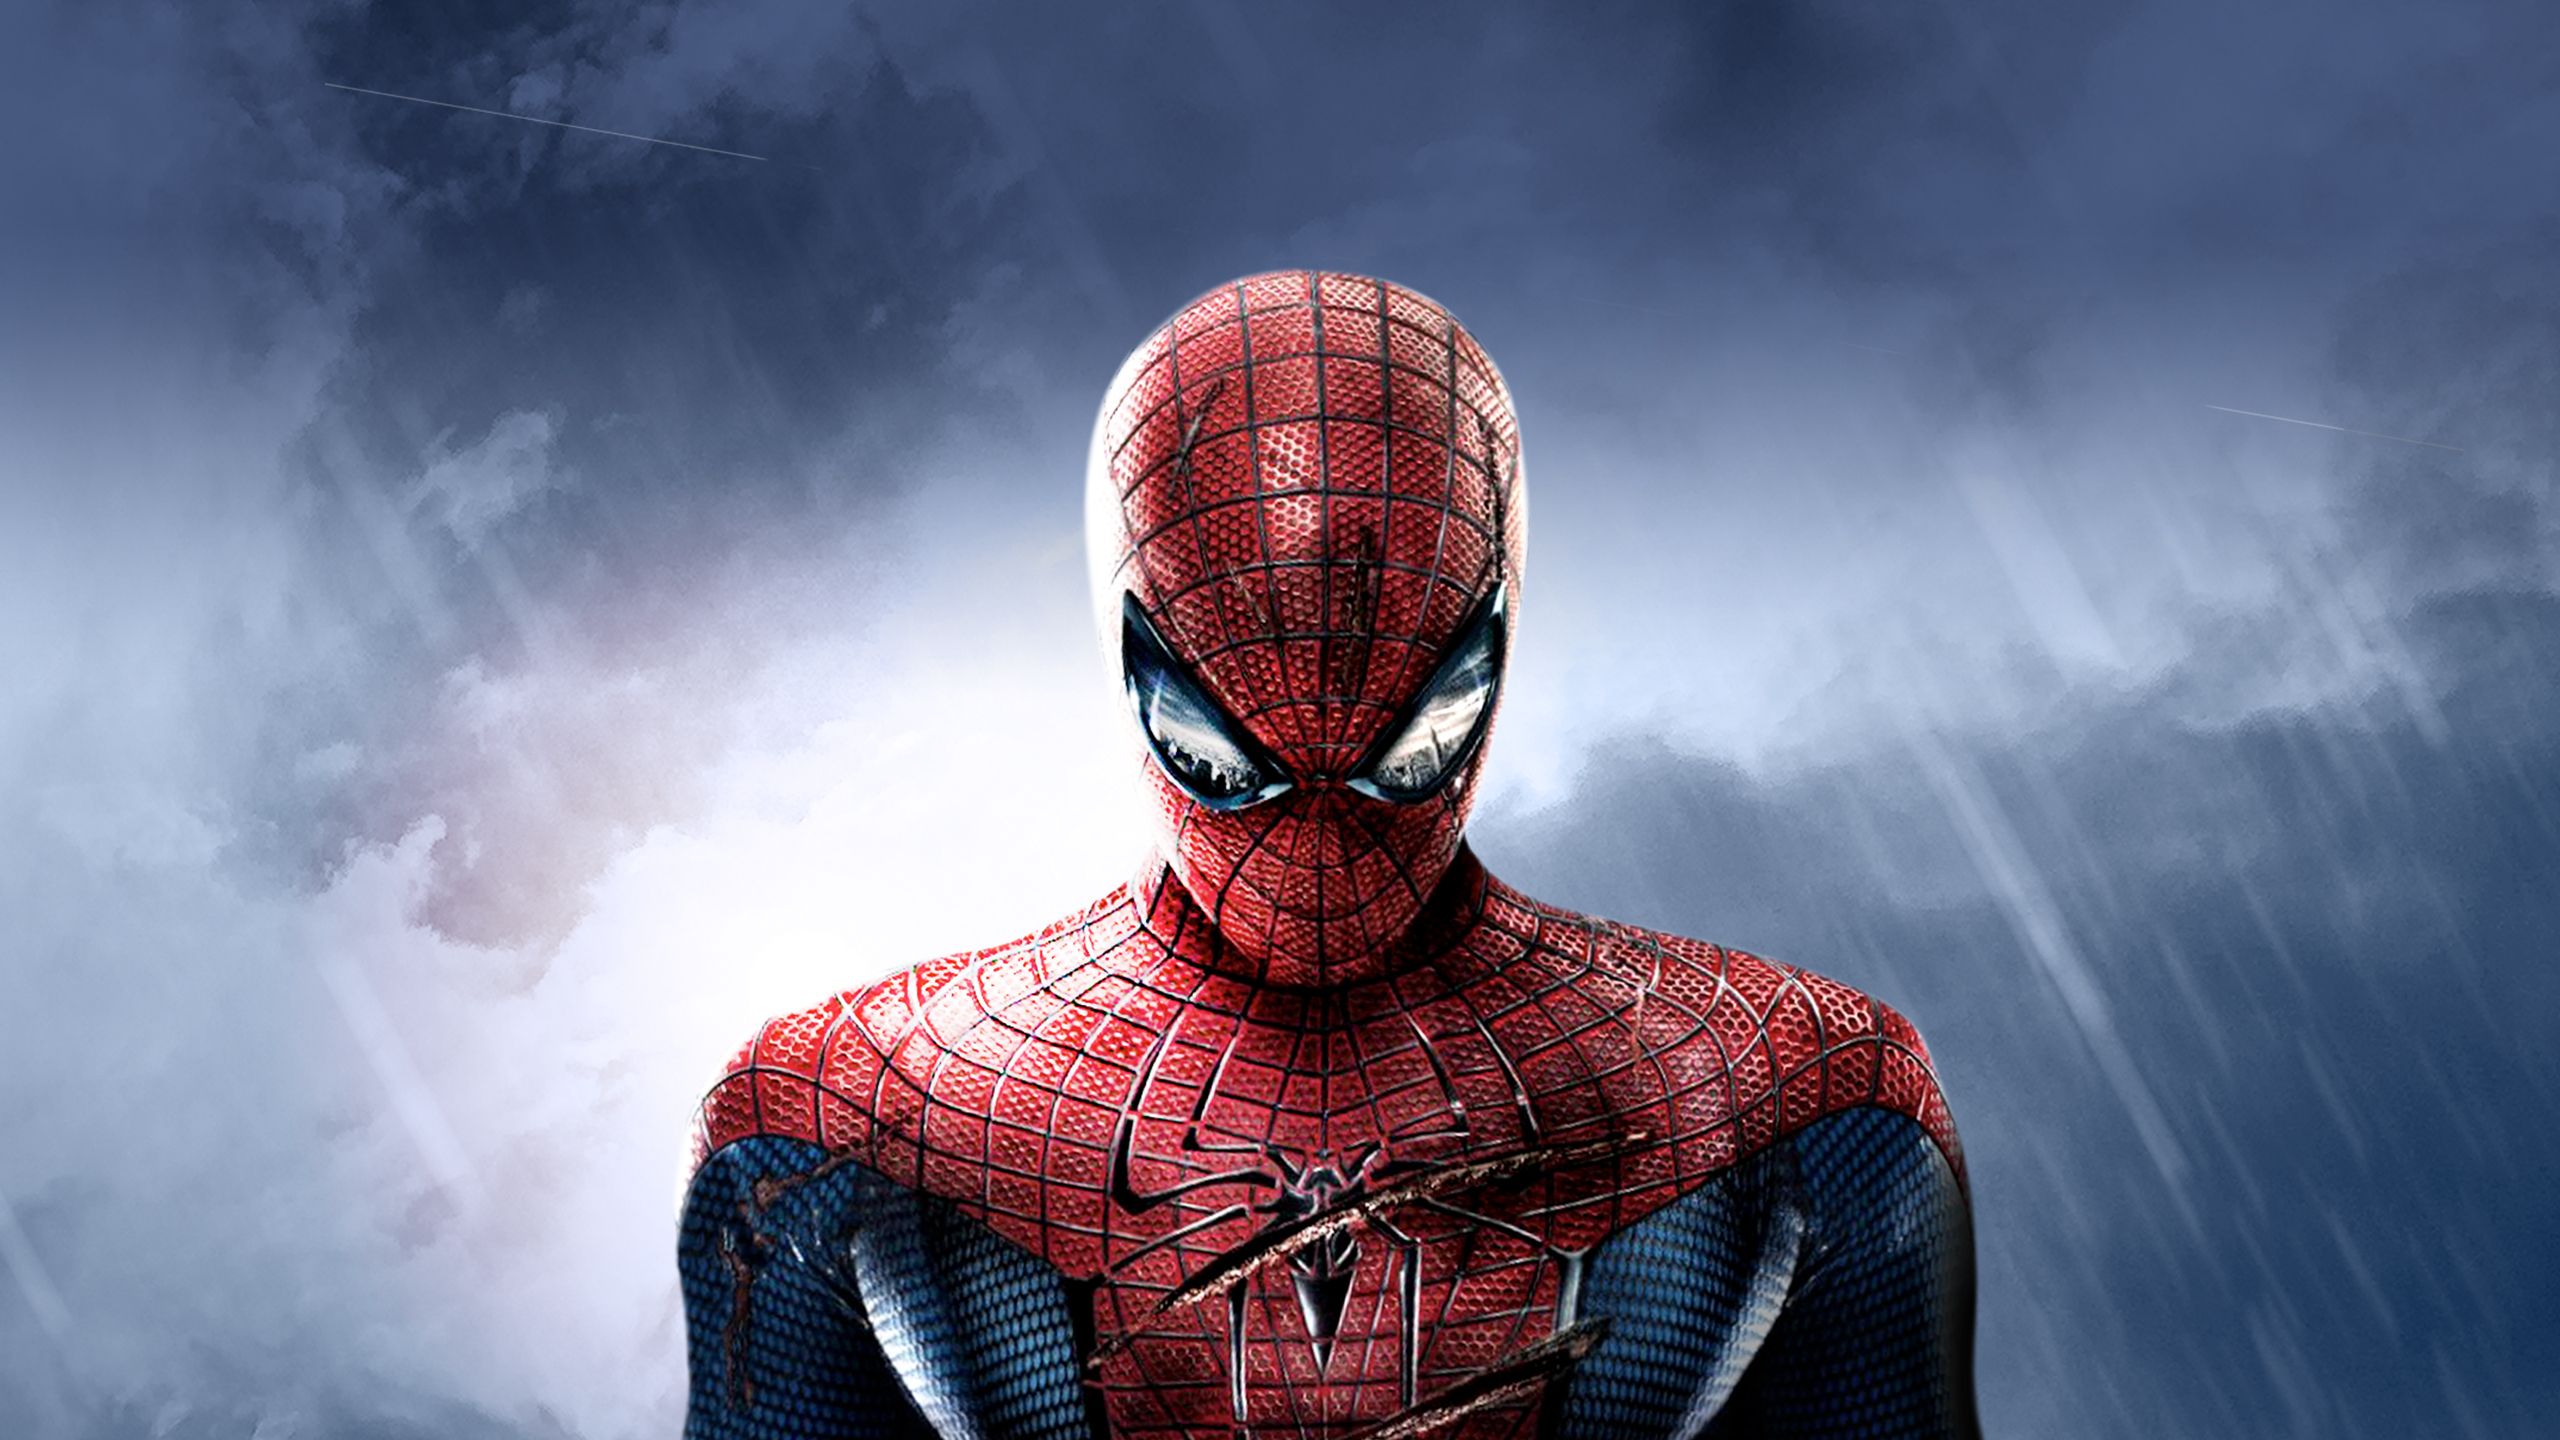 the amazing spider man full movie english